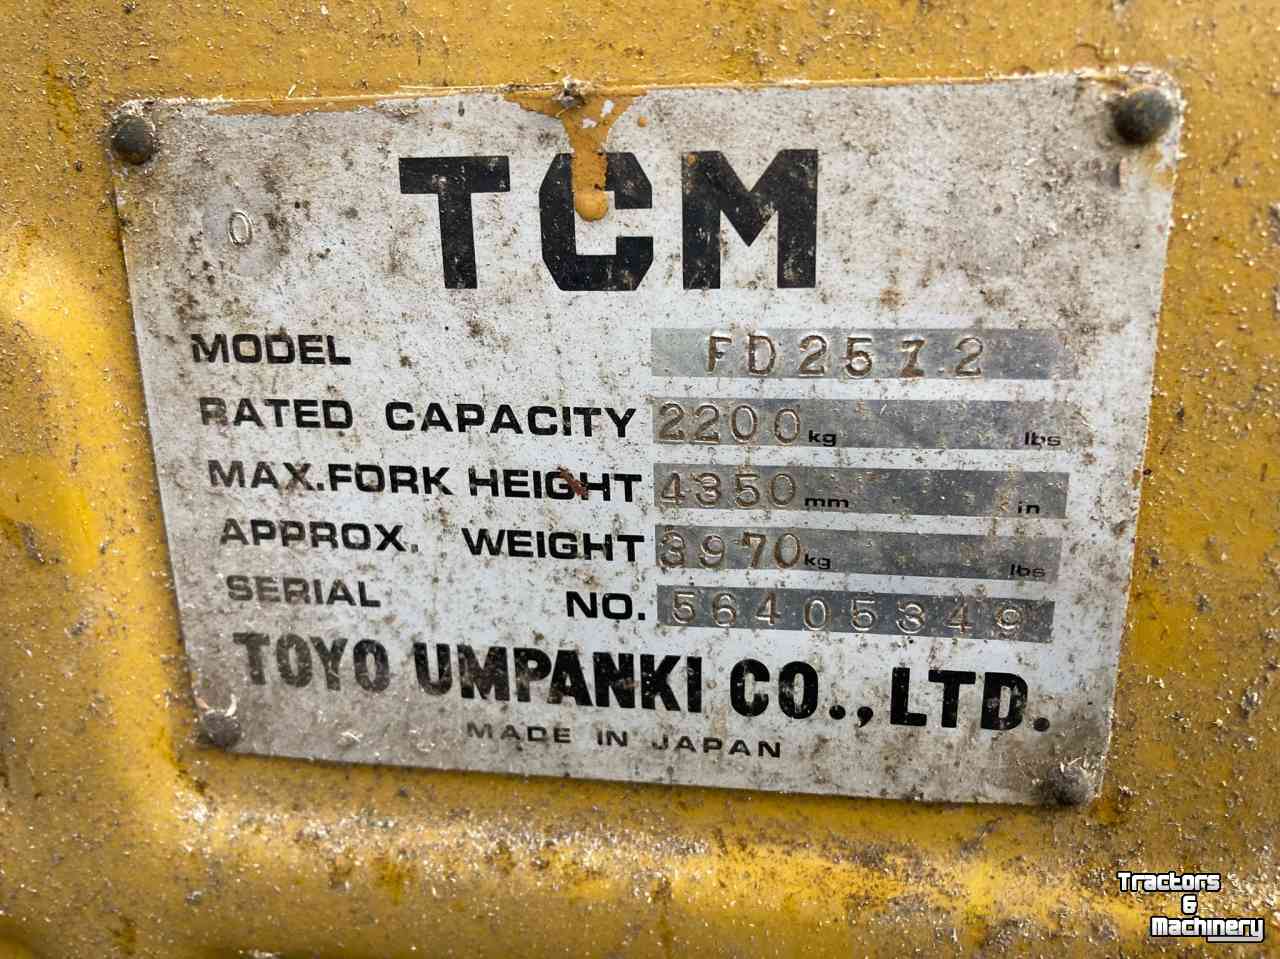 Forklift TCM 25